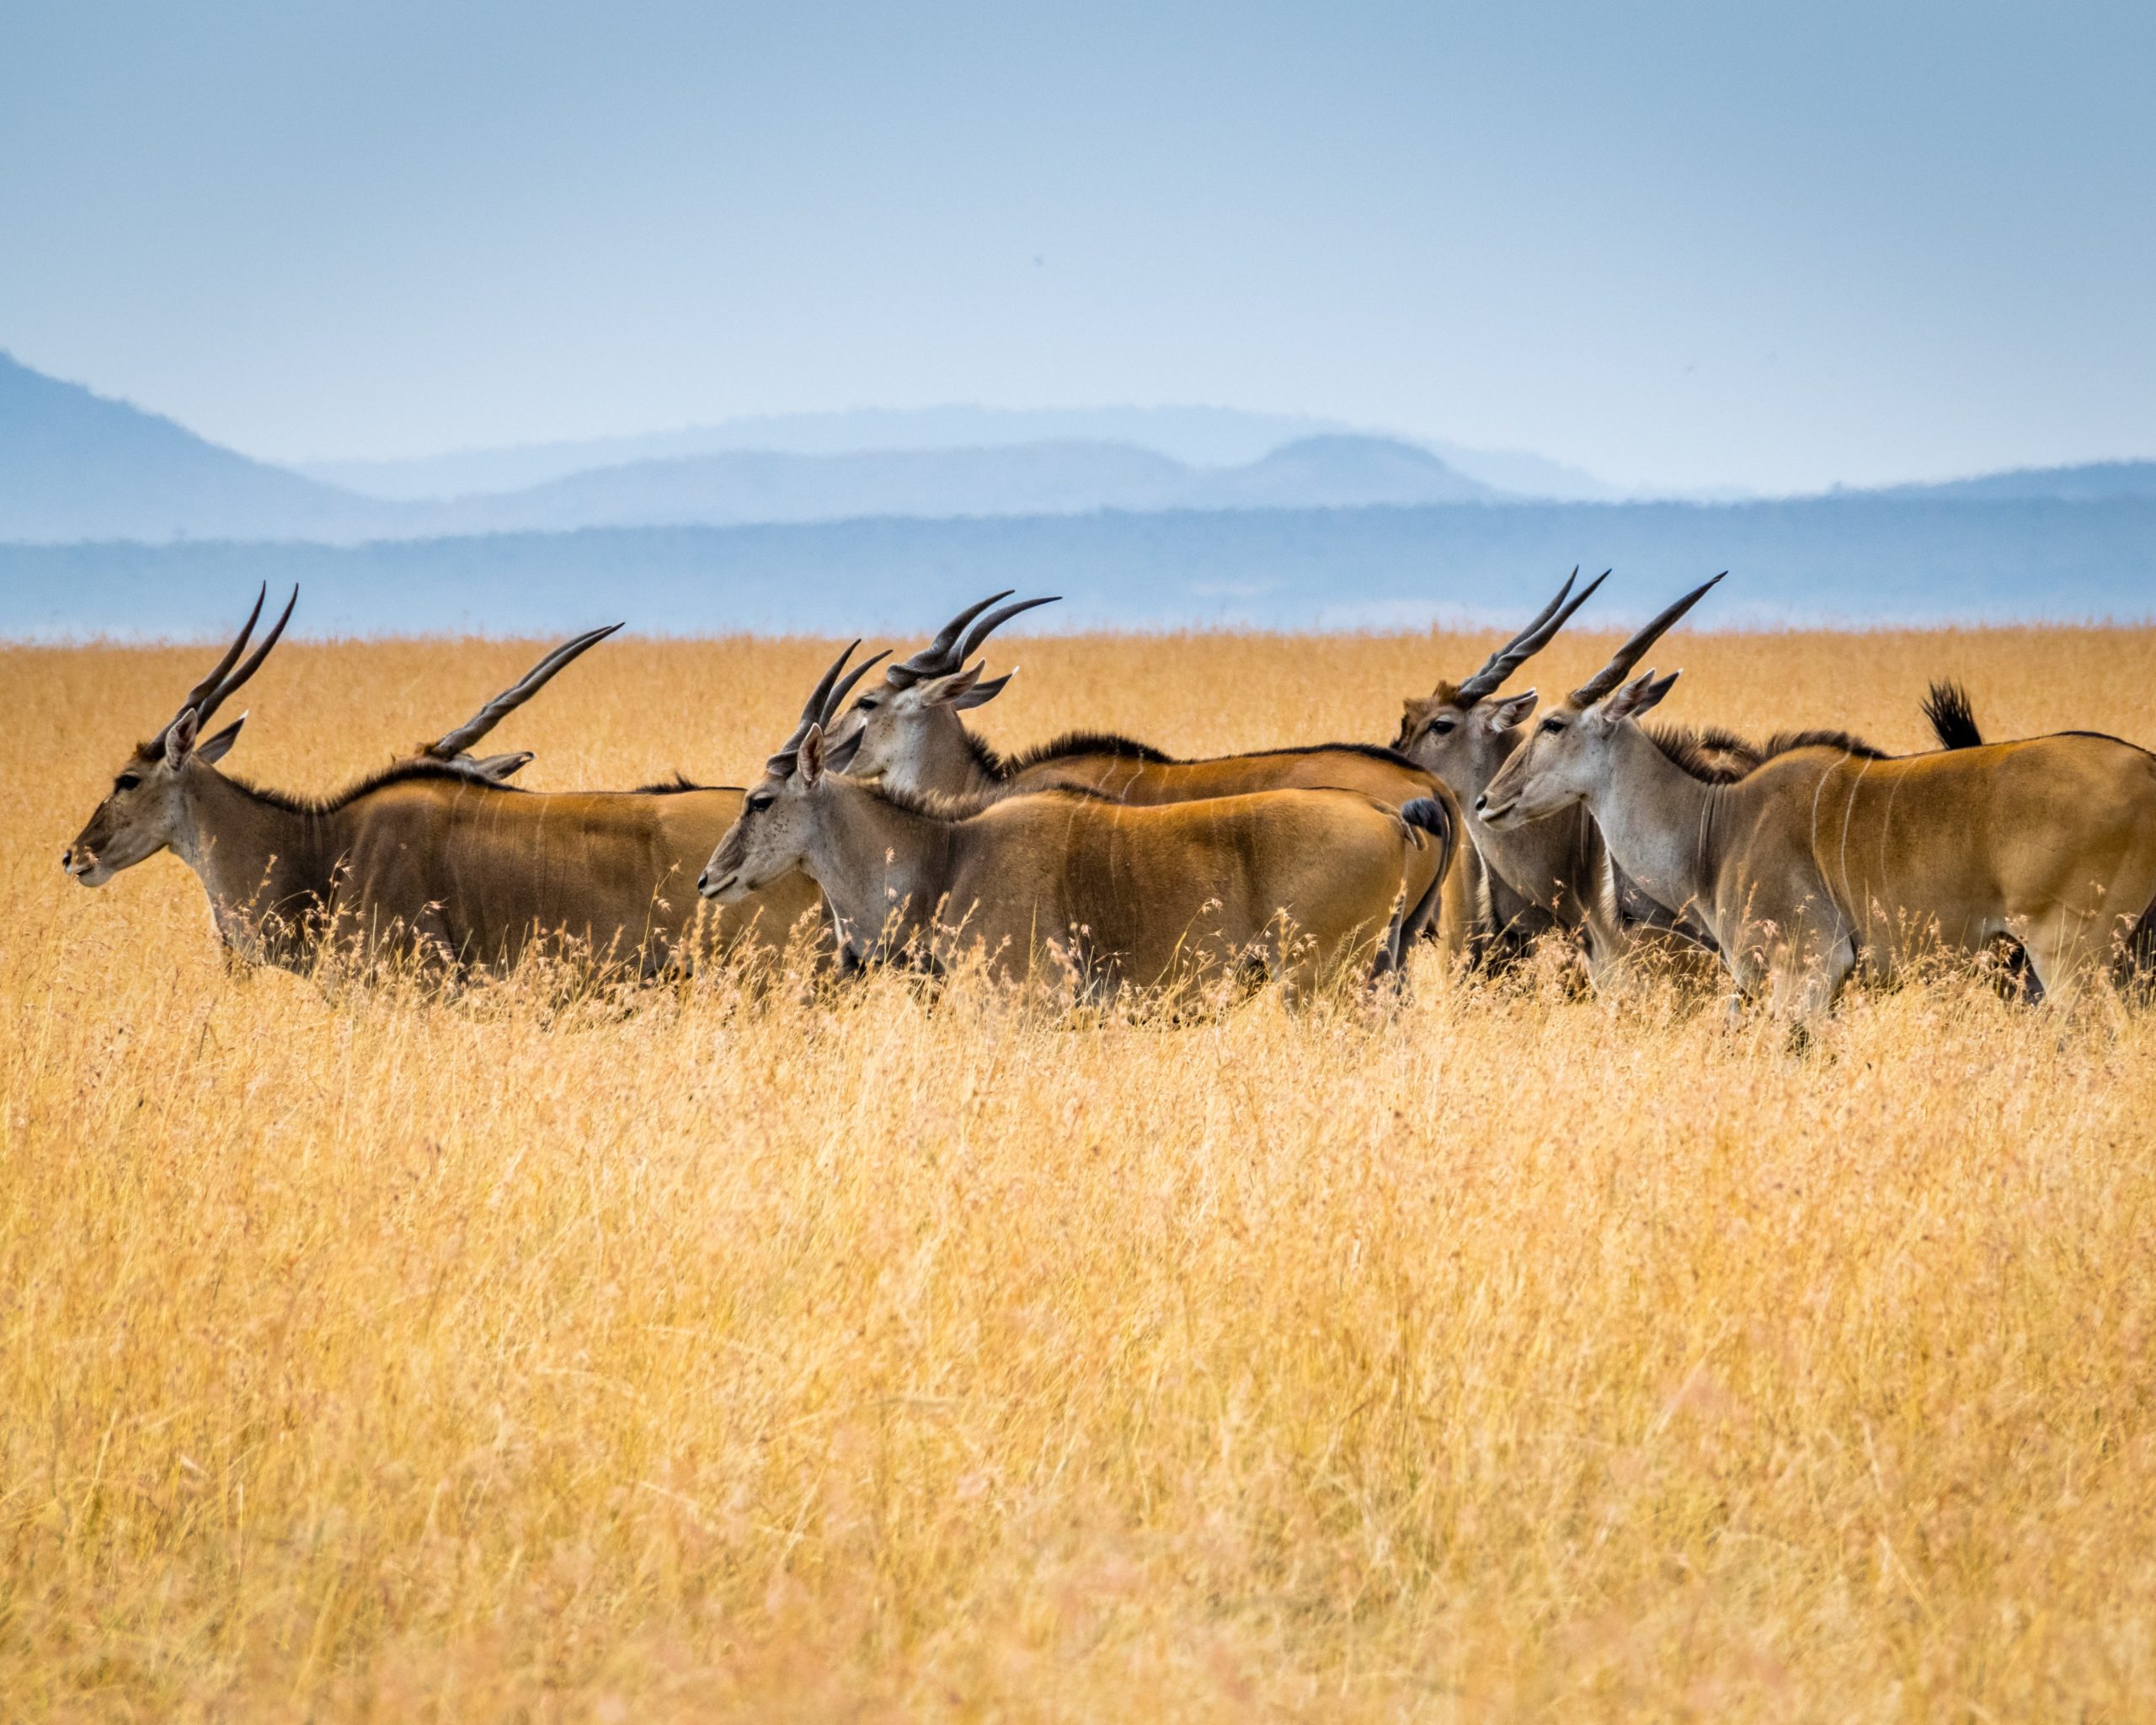 Herd of antelope walk-through dried golden grass in Masai Mara National Park in kenya